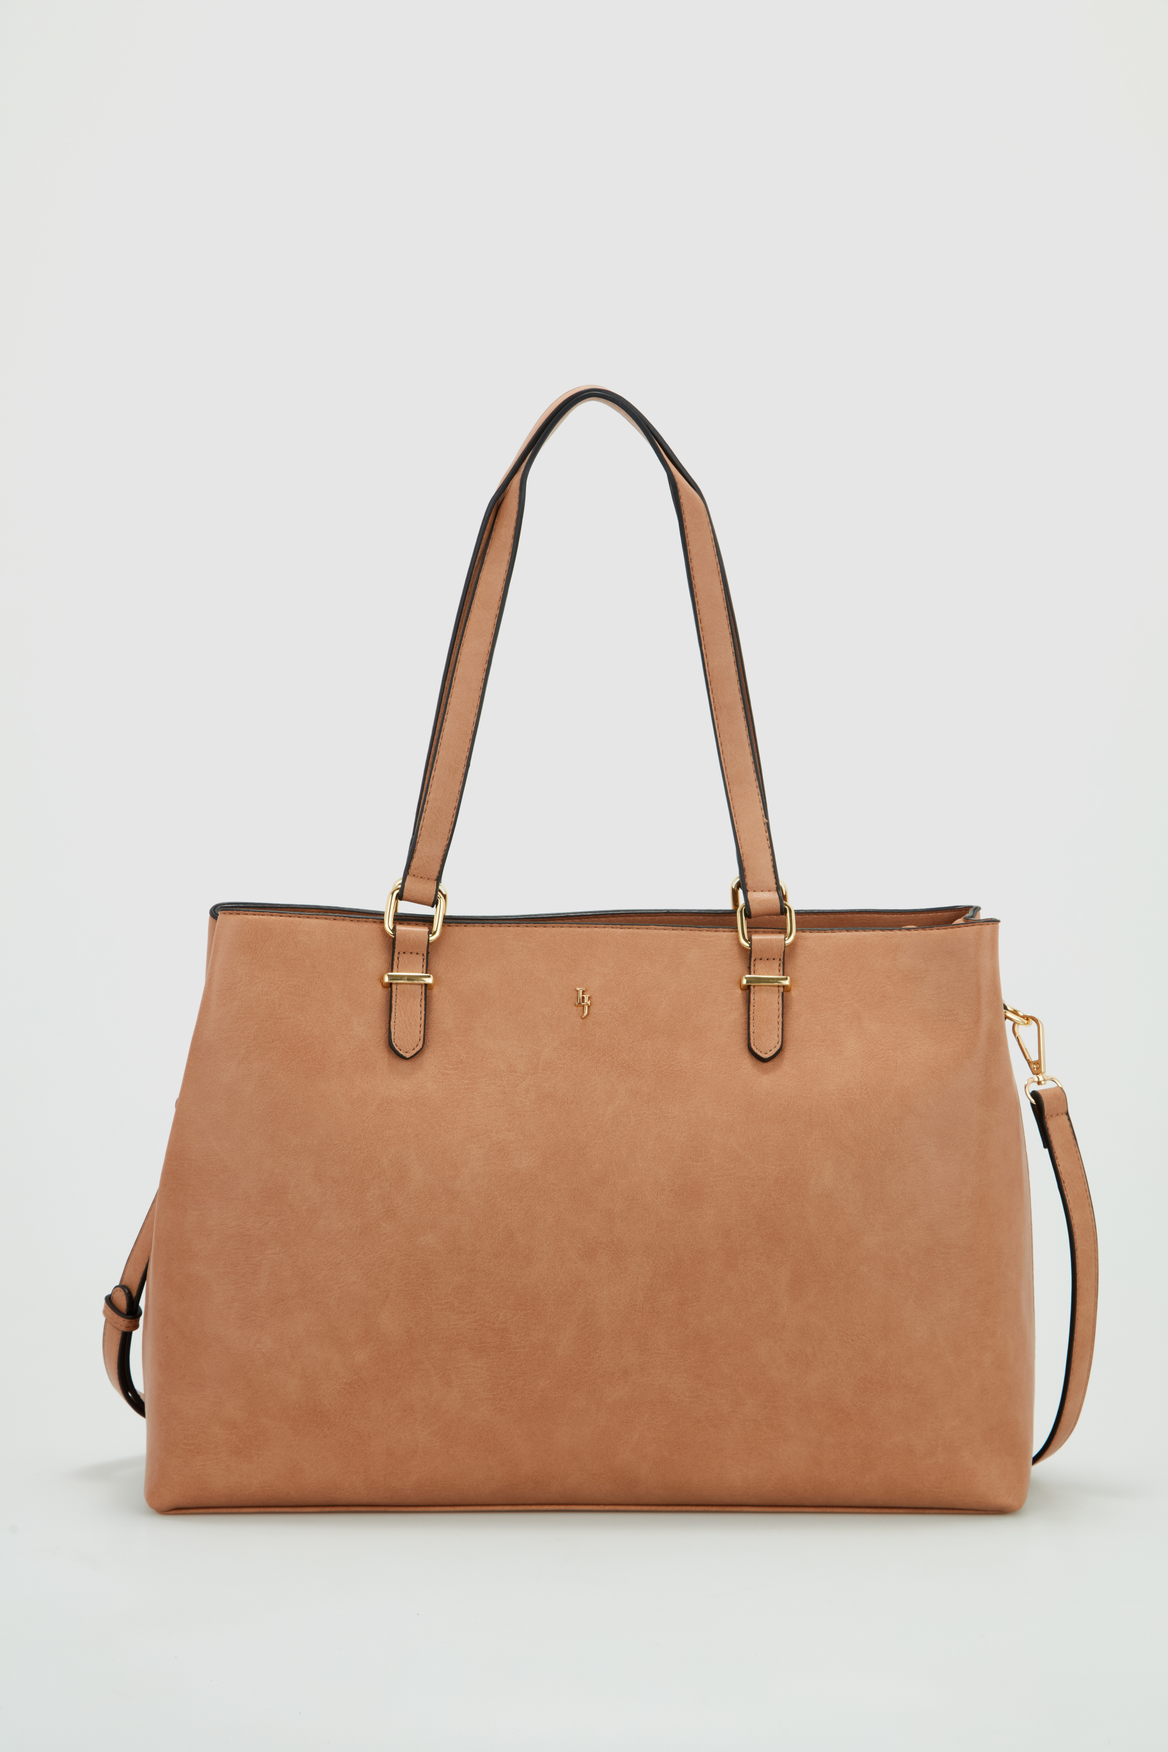 Laura Jones Handbag - Tan | Tan handbags, Handbag, Tan